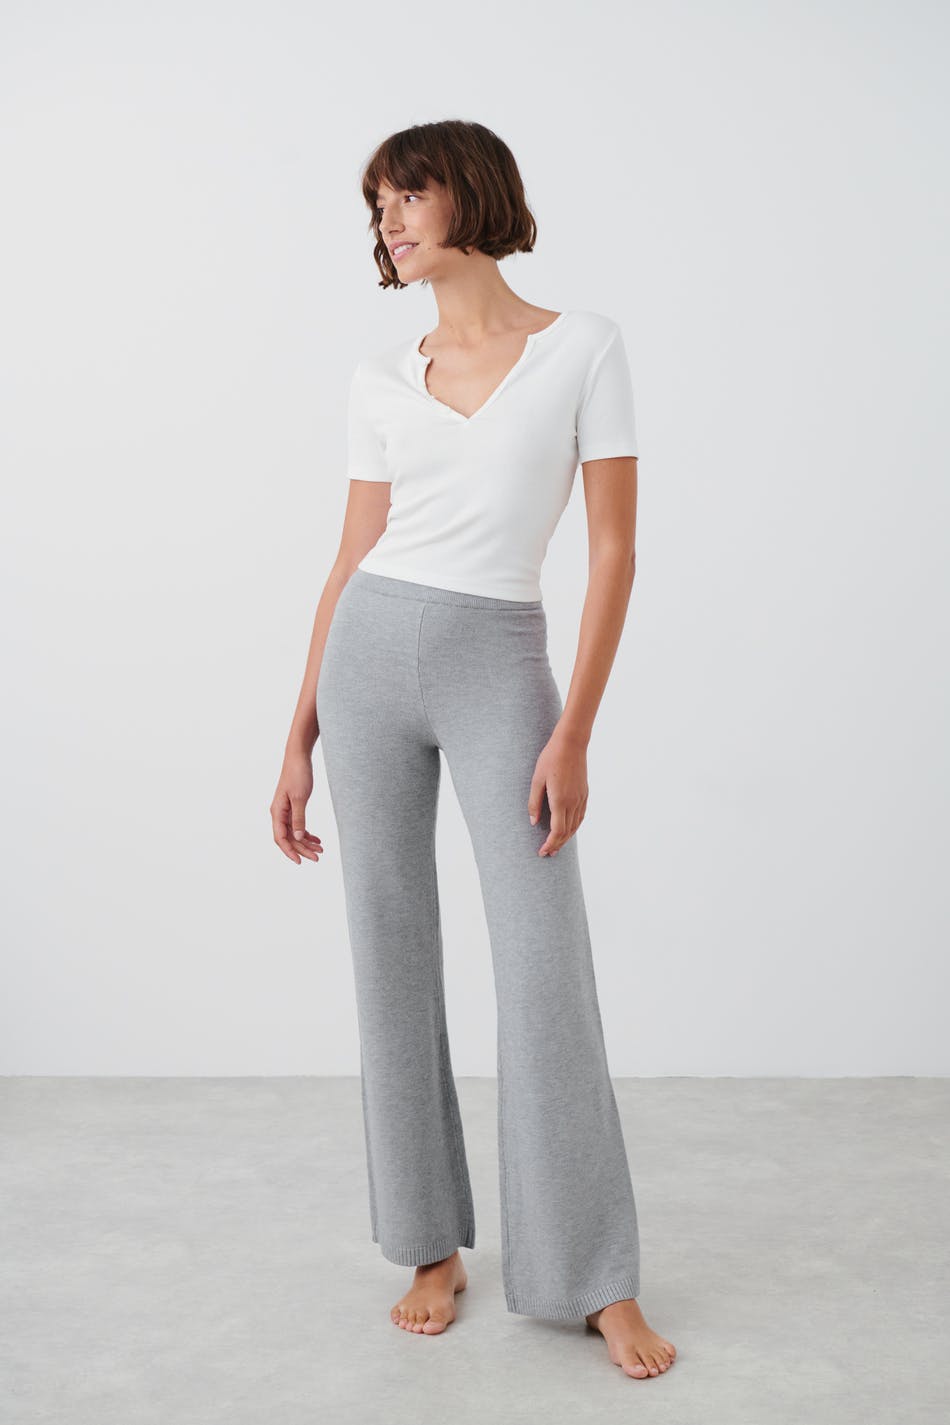 Gina Tricot - Homewear trousers - homewear - Grey - XS - Female